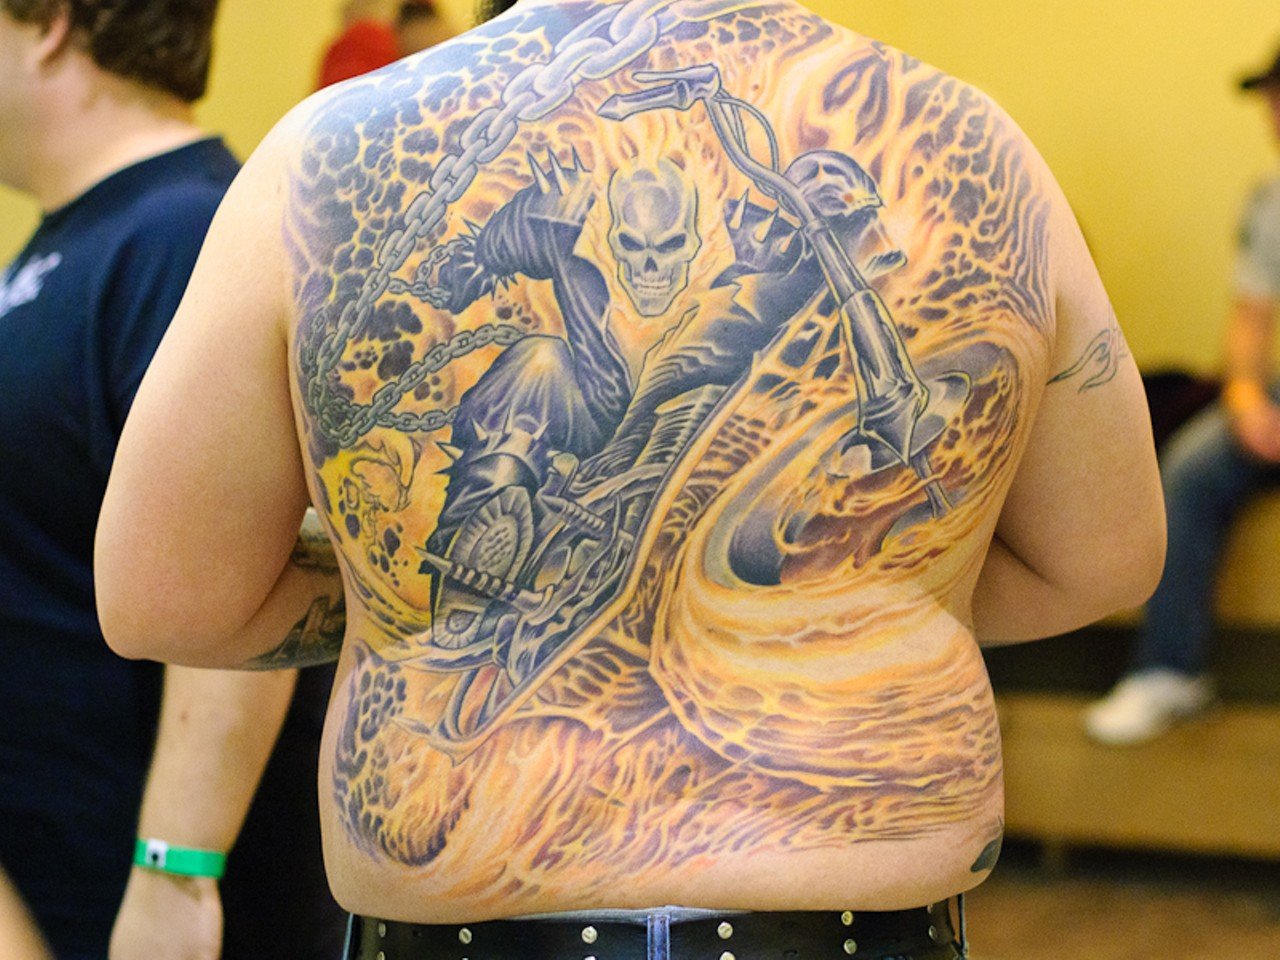 ghost rider tattoo by tattooastur on DeviantArt